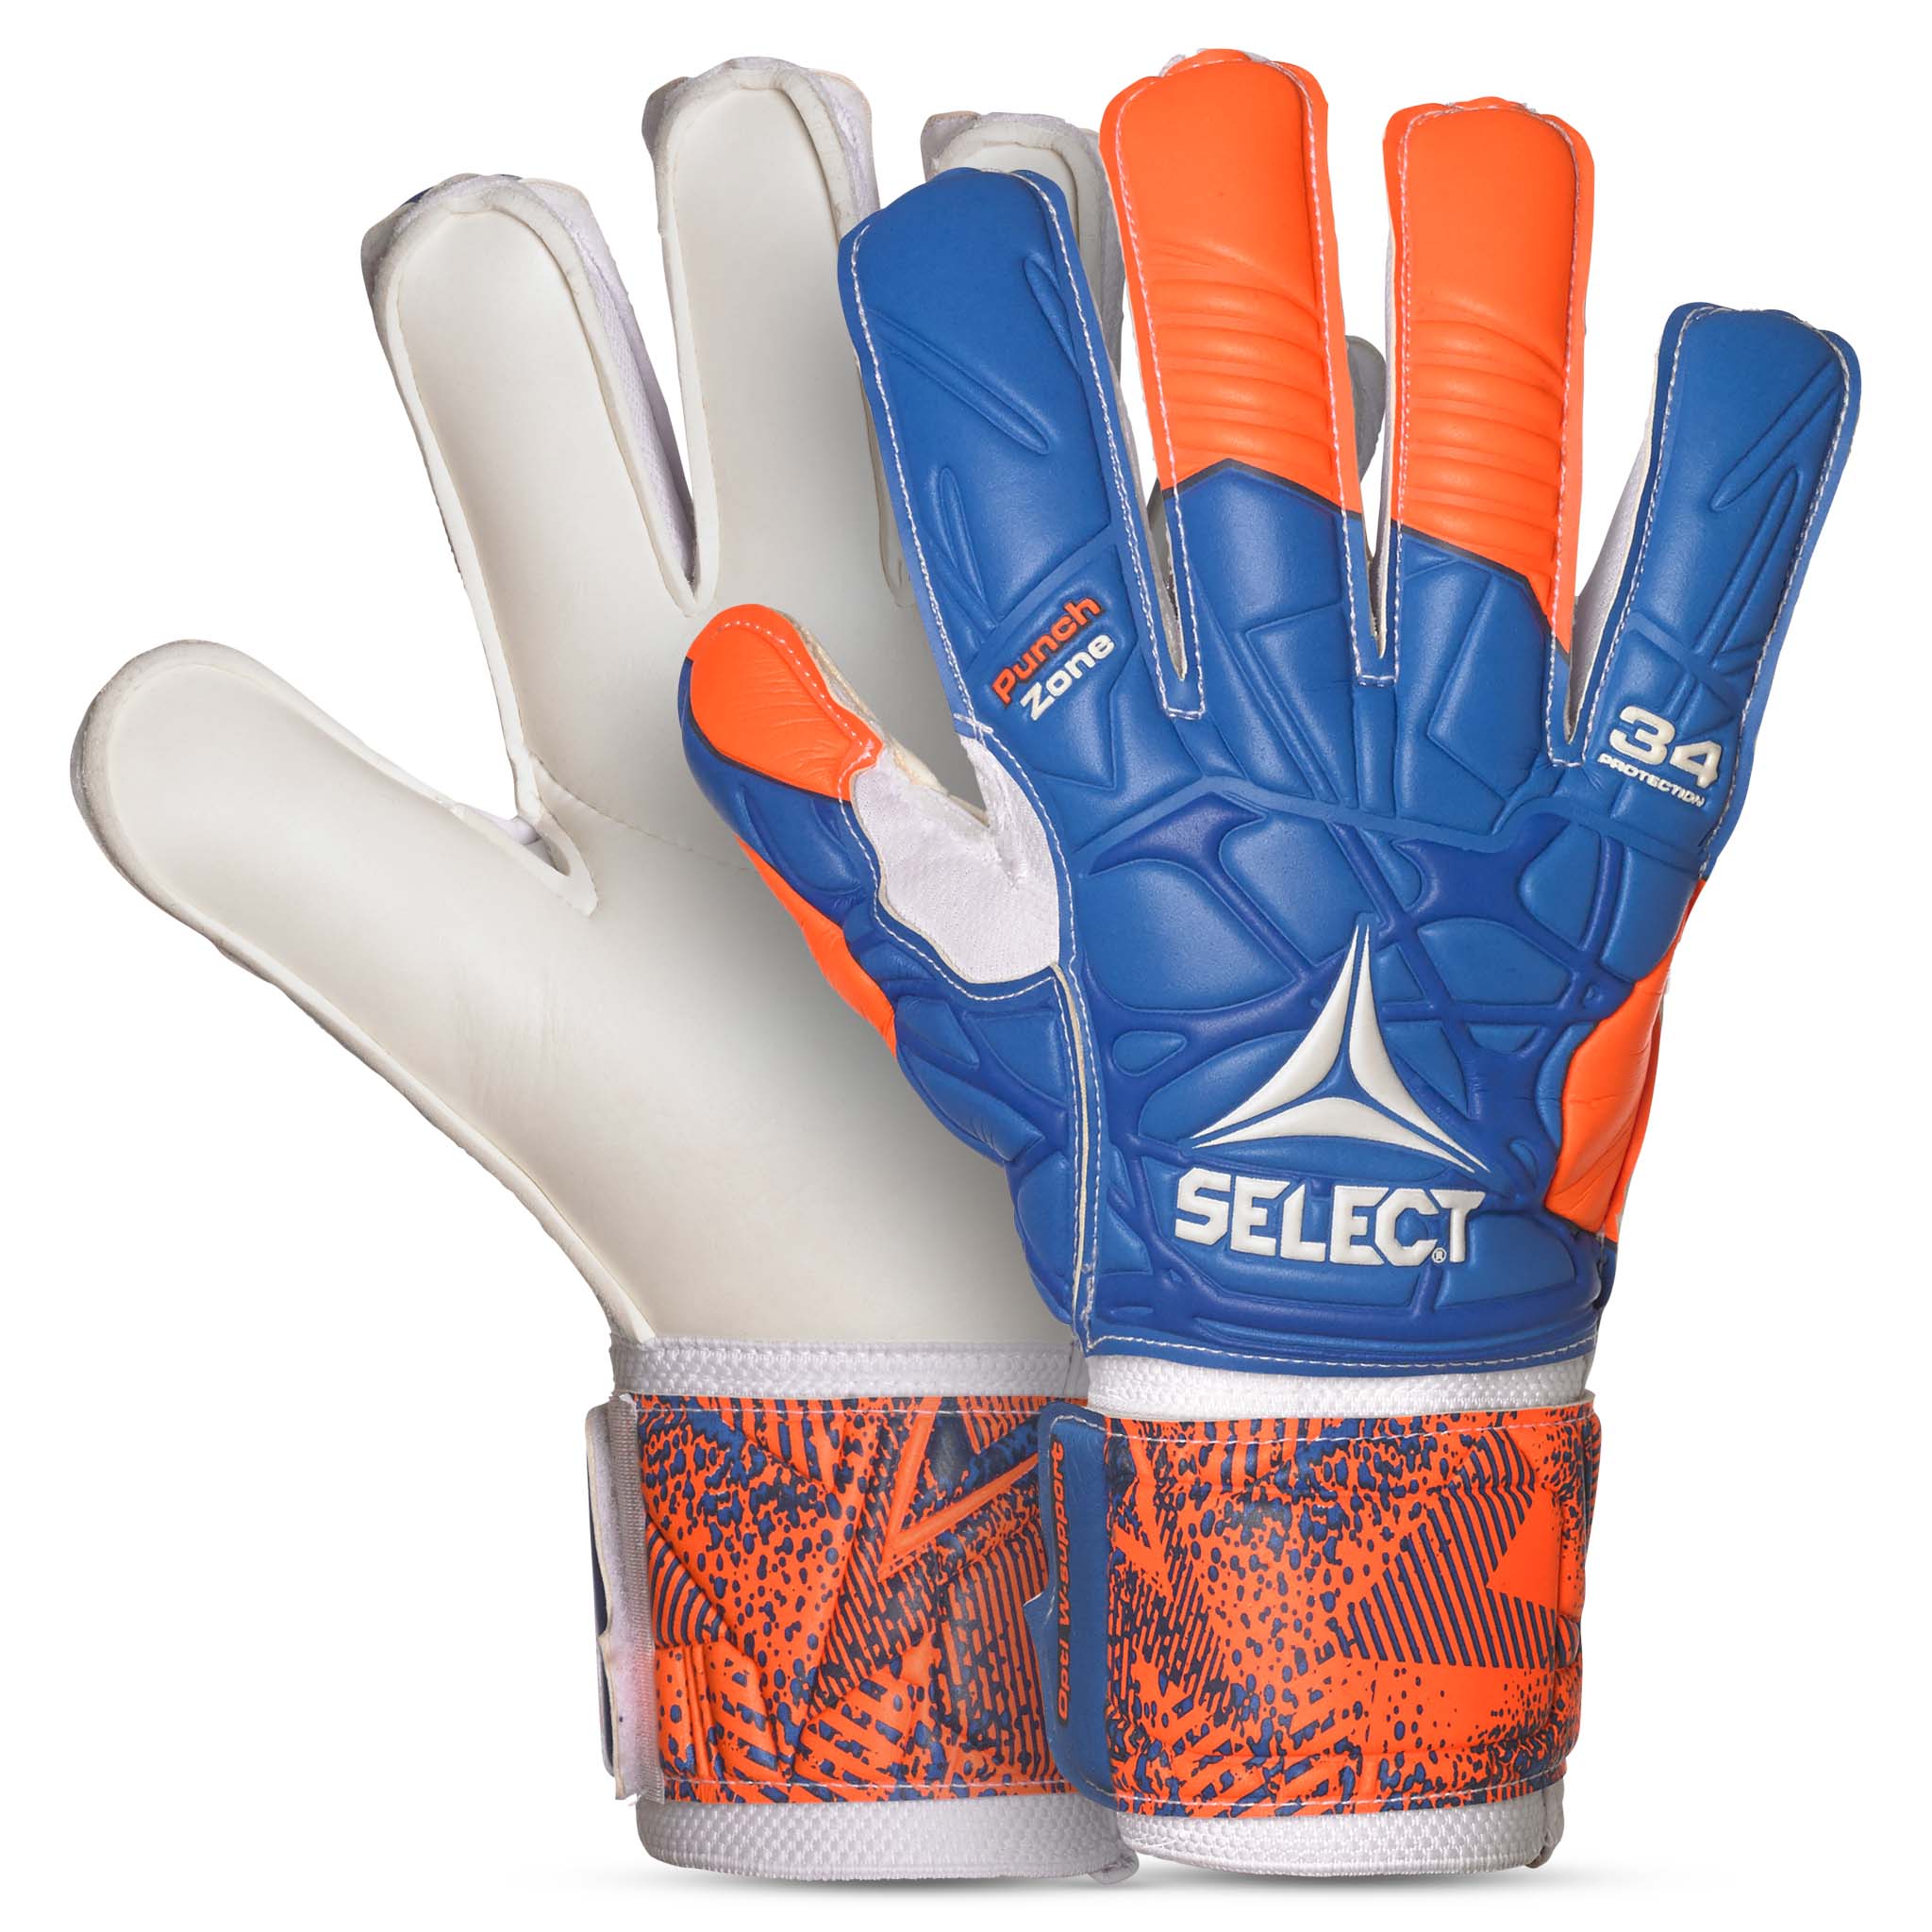 Goalkeeper gloves - 34 Protection Flat cut #colour_orange/blue/white